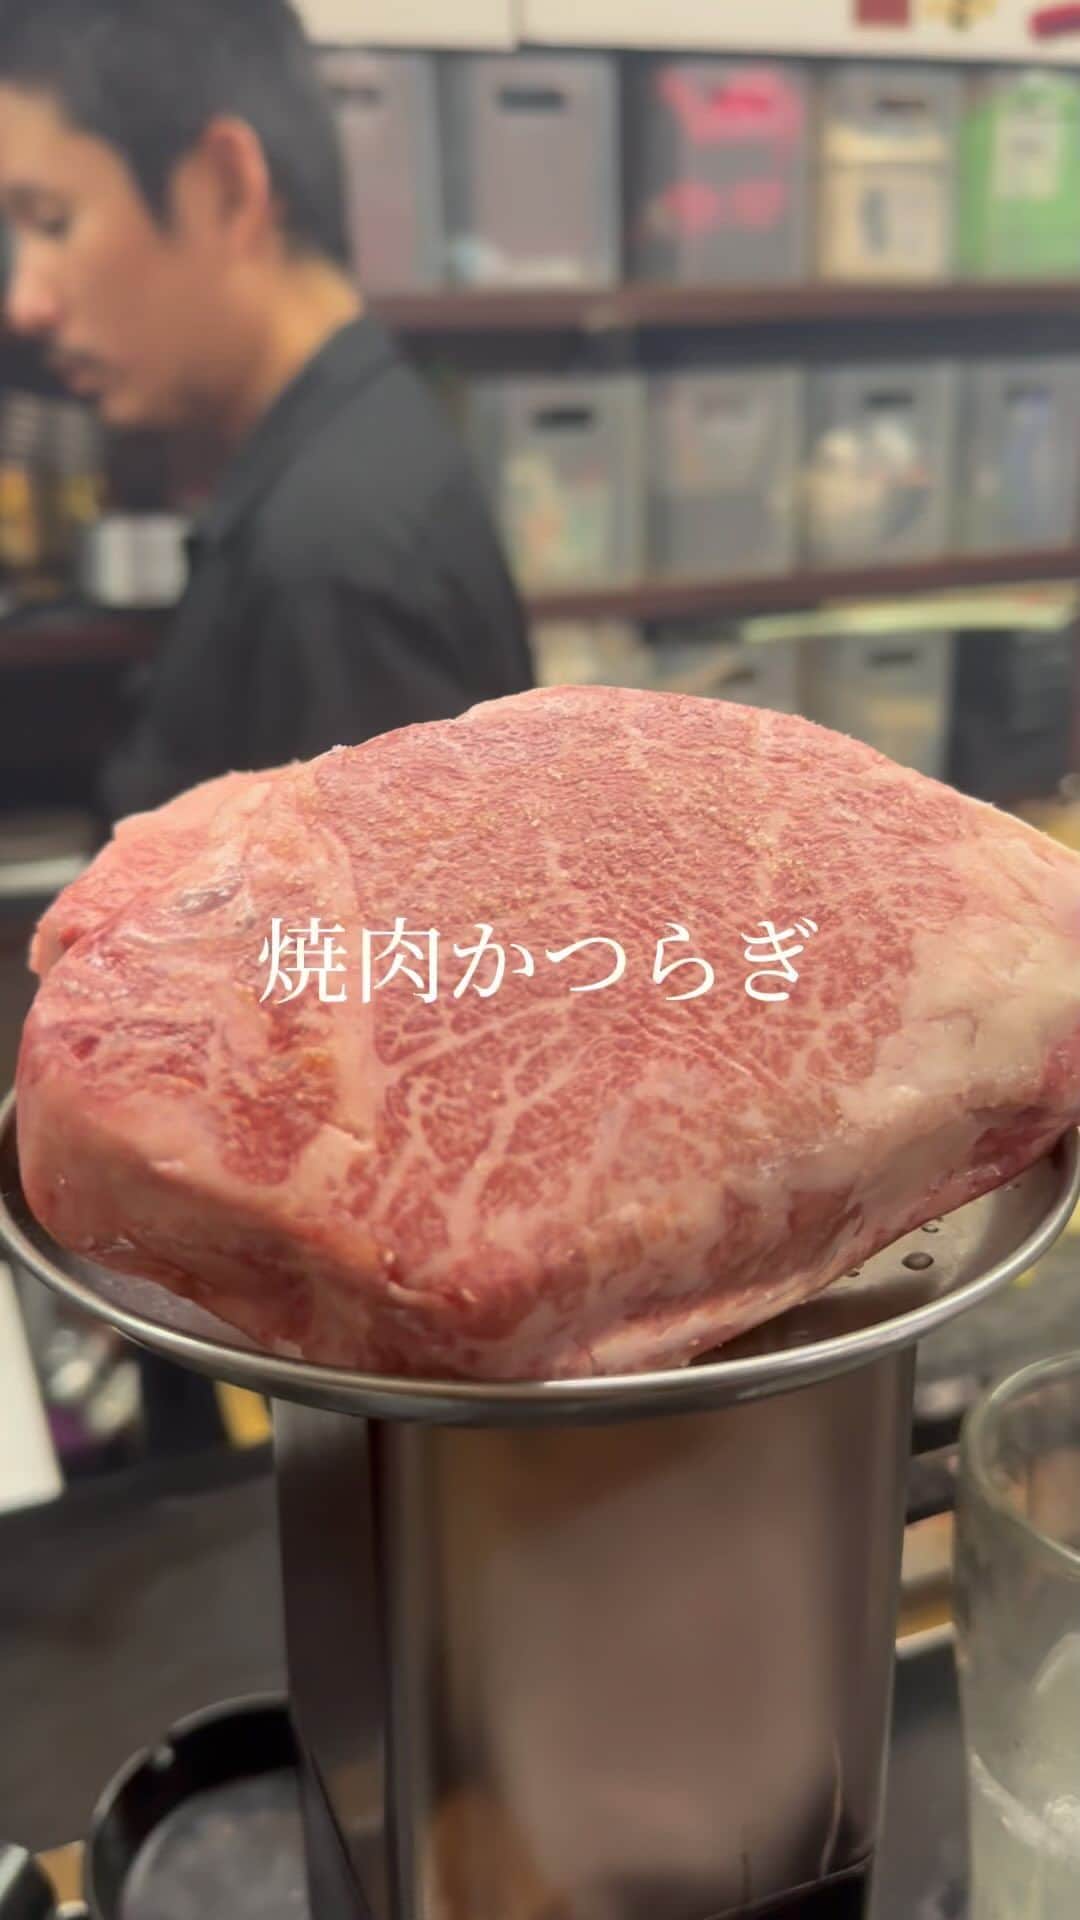 "TERIYAKI" テリヤキ編集部のインスタグラム：「大阪・堺市にお店を構える焼肉屋「焼肉かつらぎ」。  堺市駅から徒歩2-3分の場所にあり創業1959年というかなり老舗のお店だが、現在お店を切り盛りしているのは30代中盤の店主。  店内はカウンター8席ほどのこじんまりとしたお店で、全員が肉を焼き始めると店内が煙でモクモクしてしまうほど。  ただ、同店で味わえる肉がどれを食べても素晴らしいクオリティ。  名物のシャートーブリアンは予約必須のメニュー。卵かけご飯(タレ入り)と一緒に乗せて食べるのが贅沢に極み。  タンモト、カルビ、ハラミなどももちろん最高。今回は同店に訪れるためだけに日帰り大阪したくらい。間違いなく、これからもっと人気になる焼肉屋だと思う。  ​⁠ #焼肉かつらぎ #大阪 #大阪グルメ #焼肉 #yakiniku」